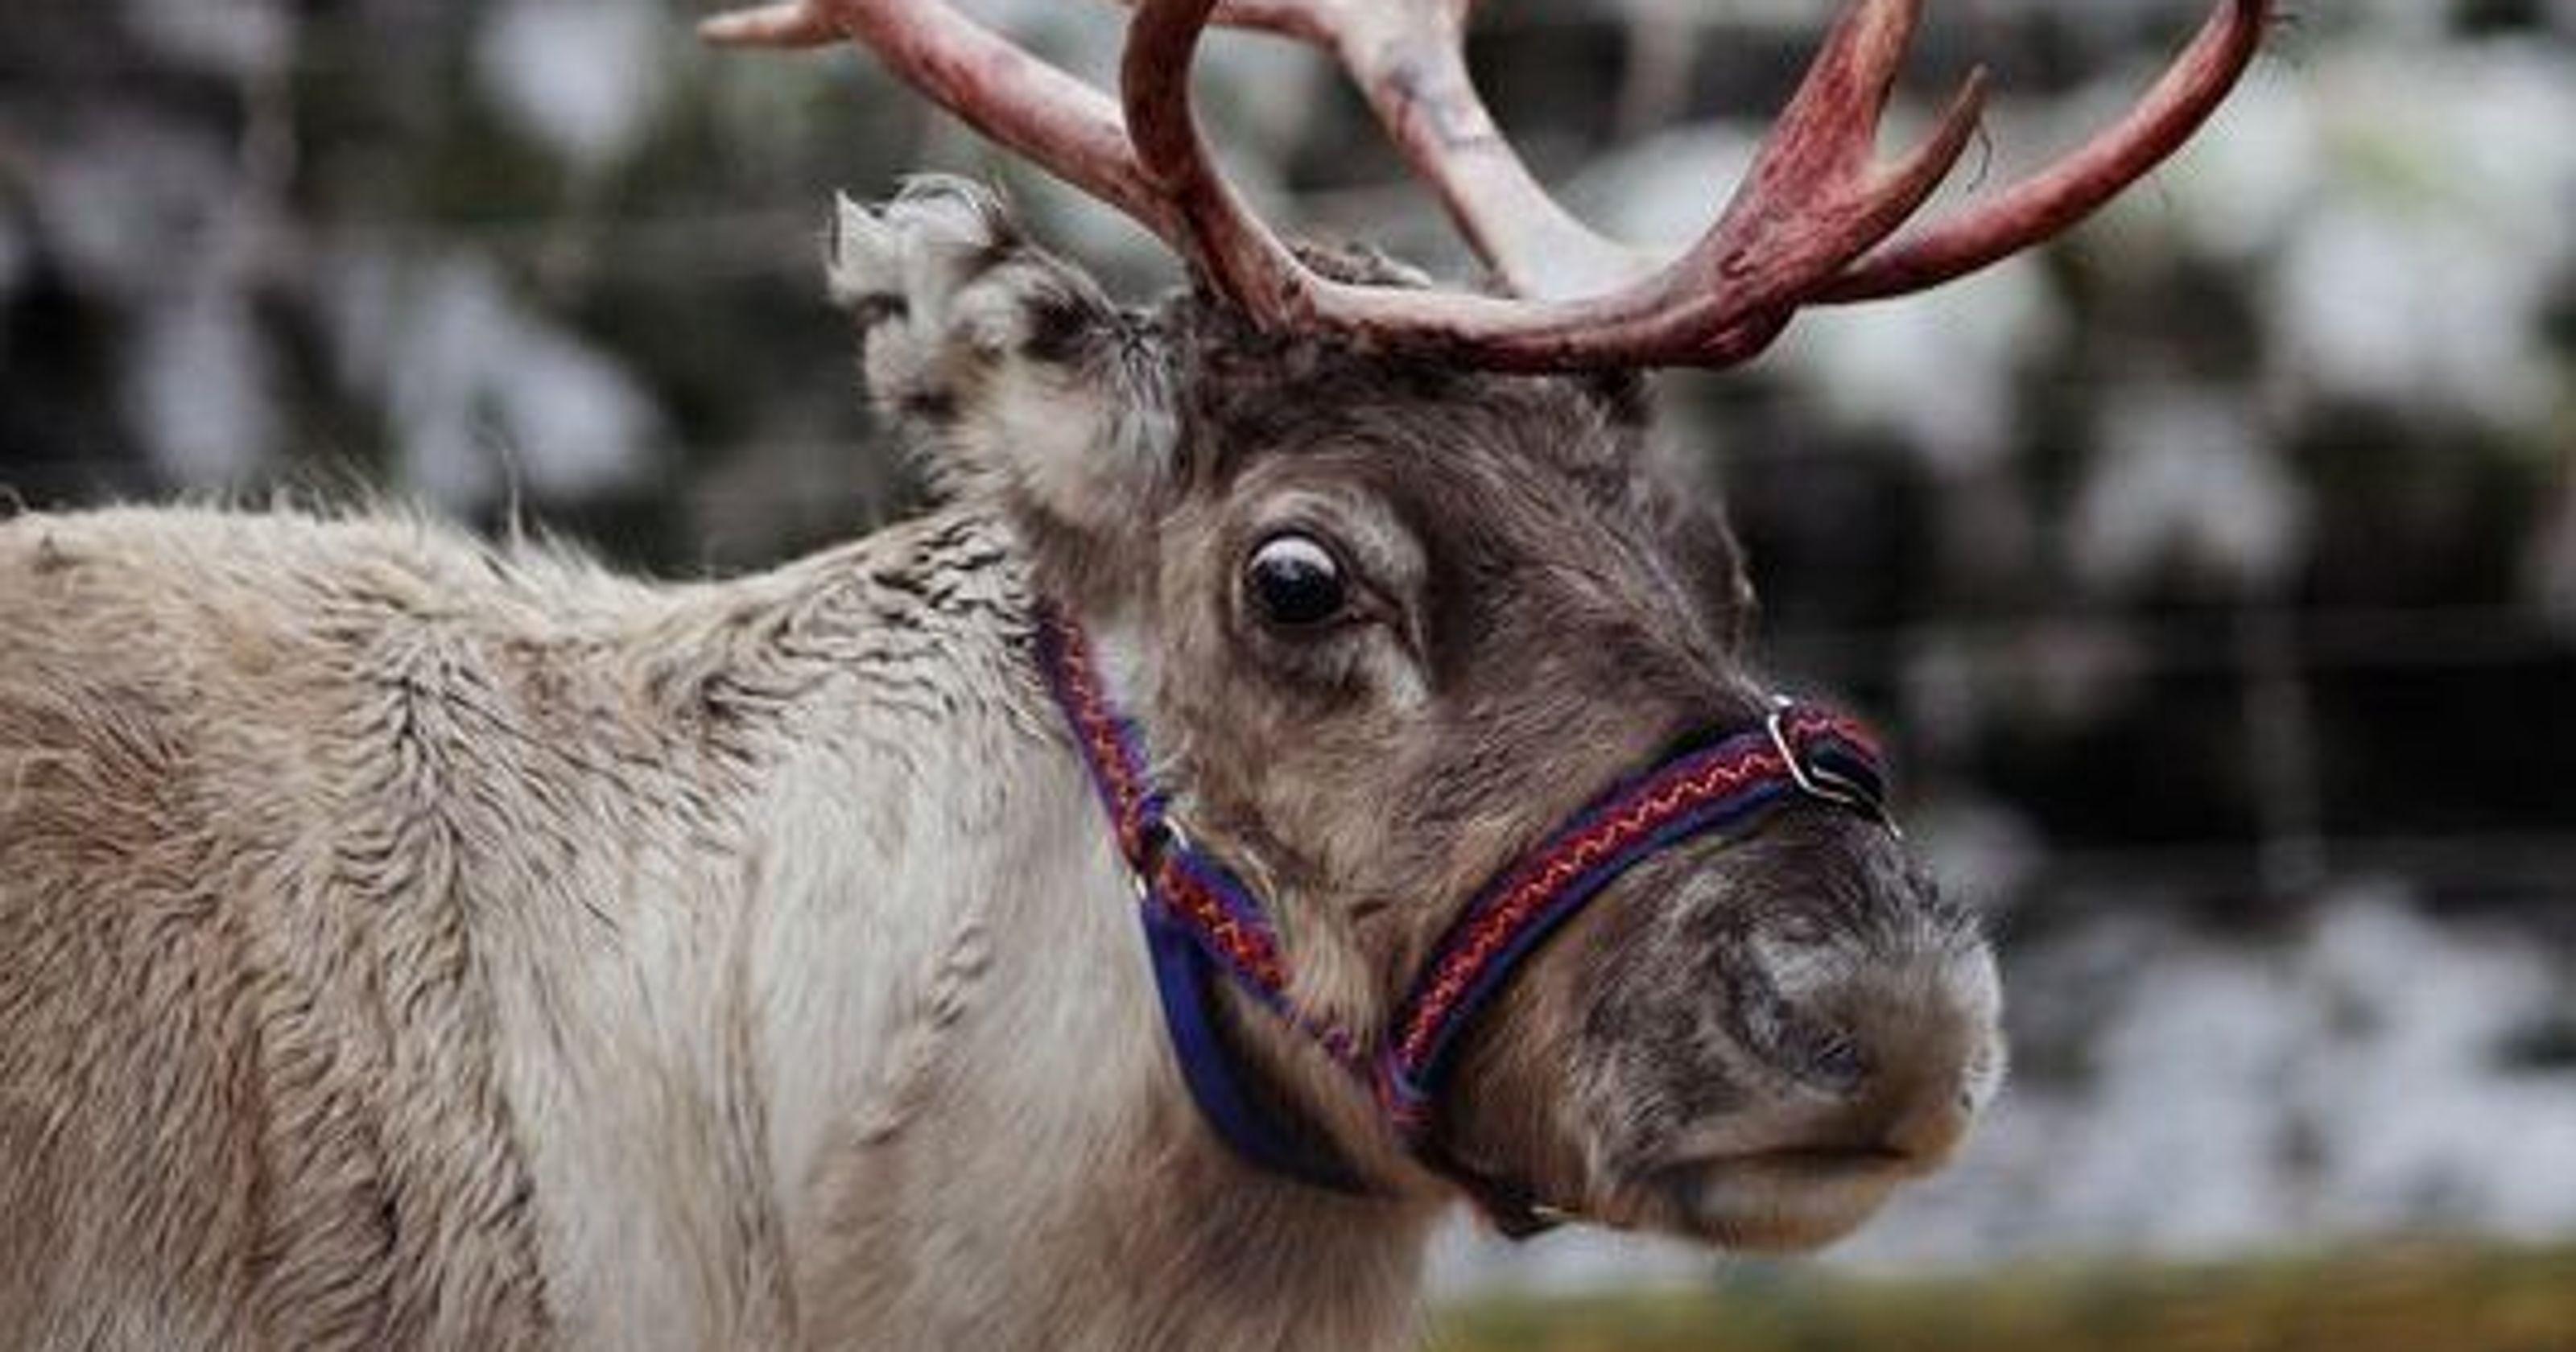 USDA gives Santa's reindeer permit to enter U.S